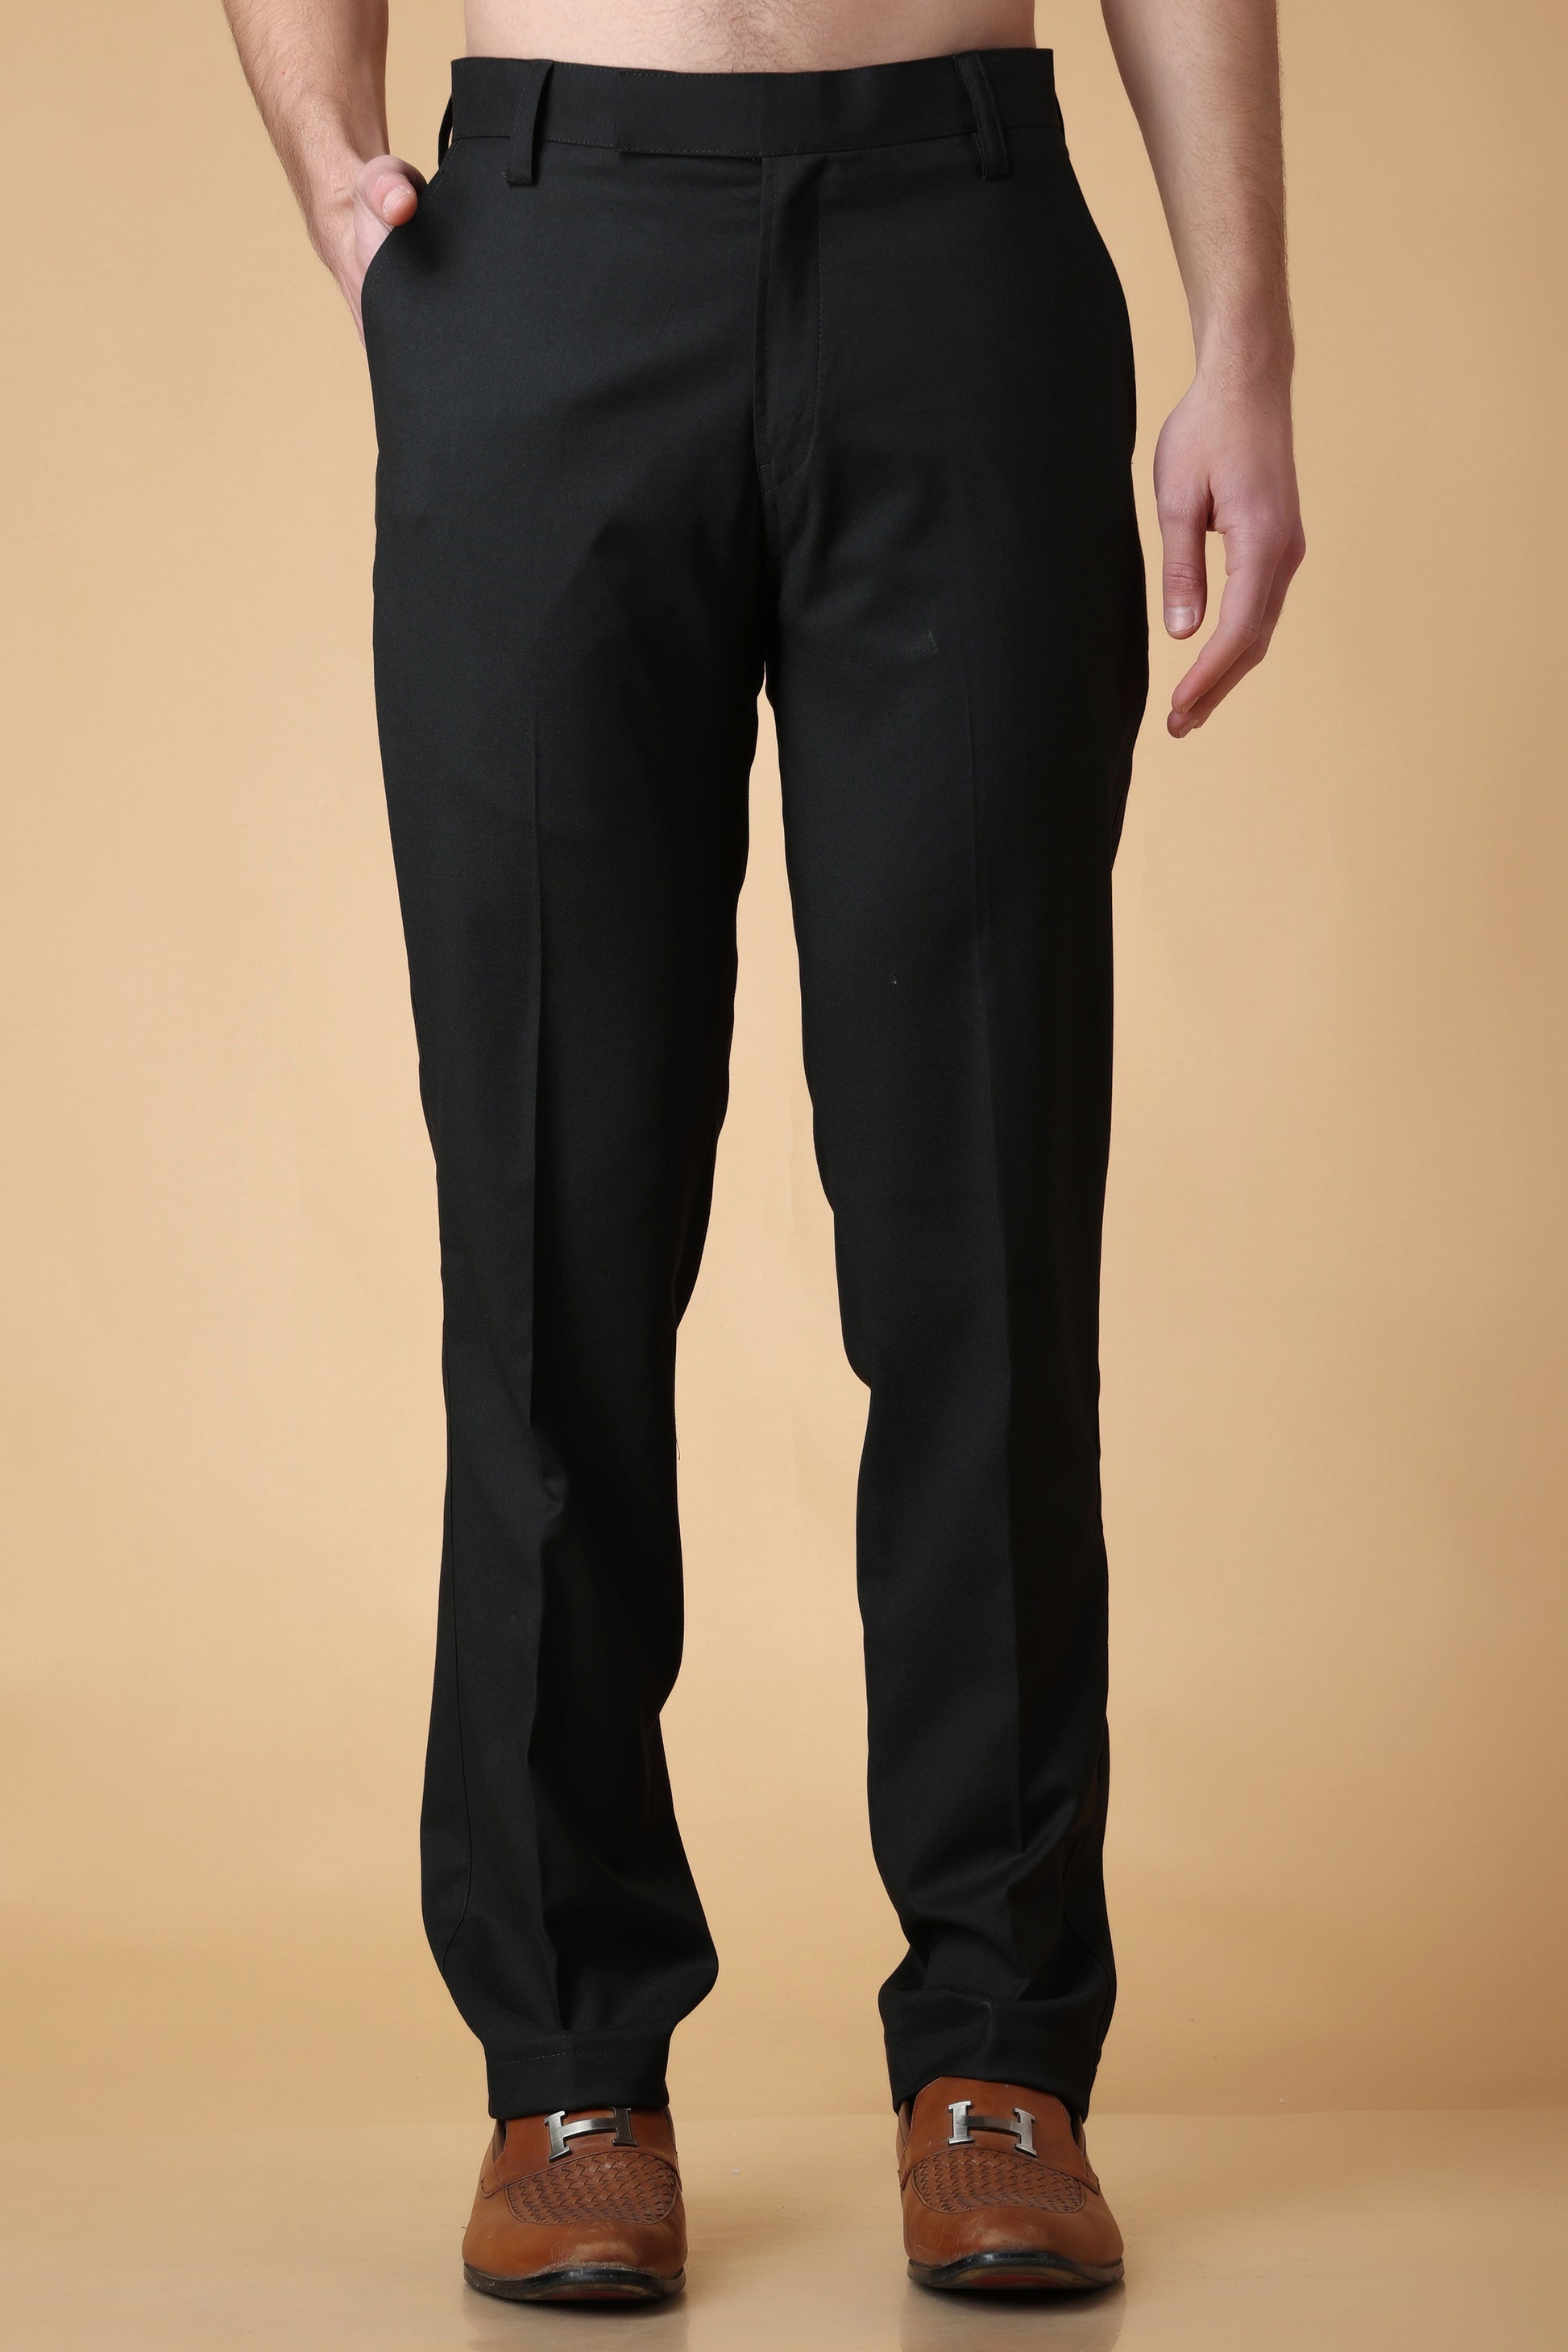 Buy Black Formal Trousers & Formal Trousers For Mens - Apella